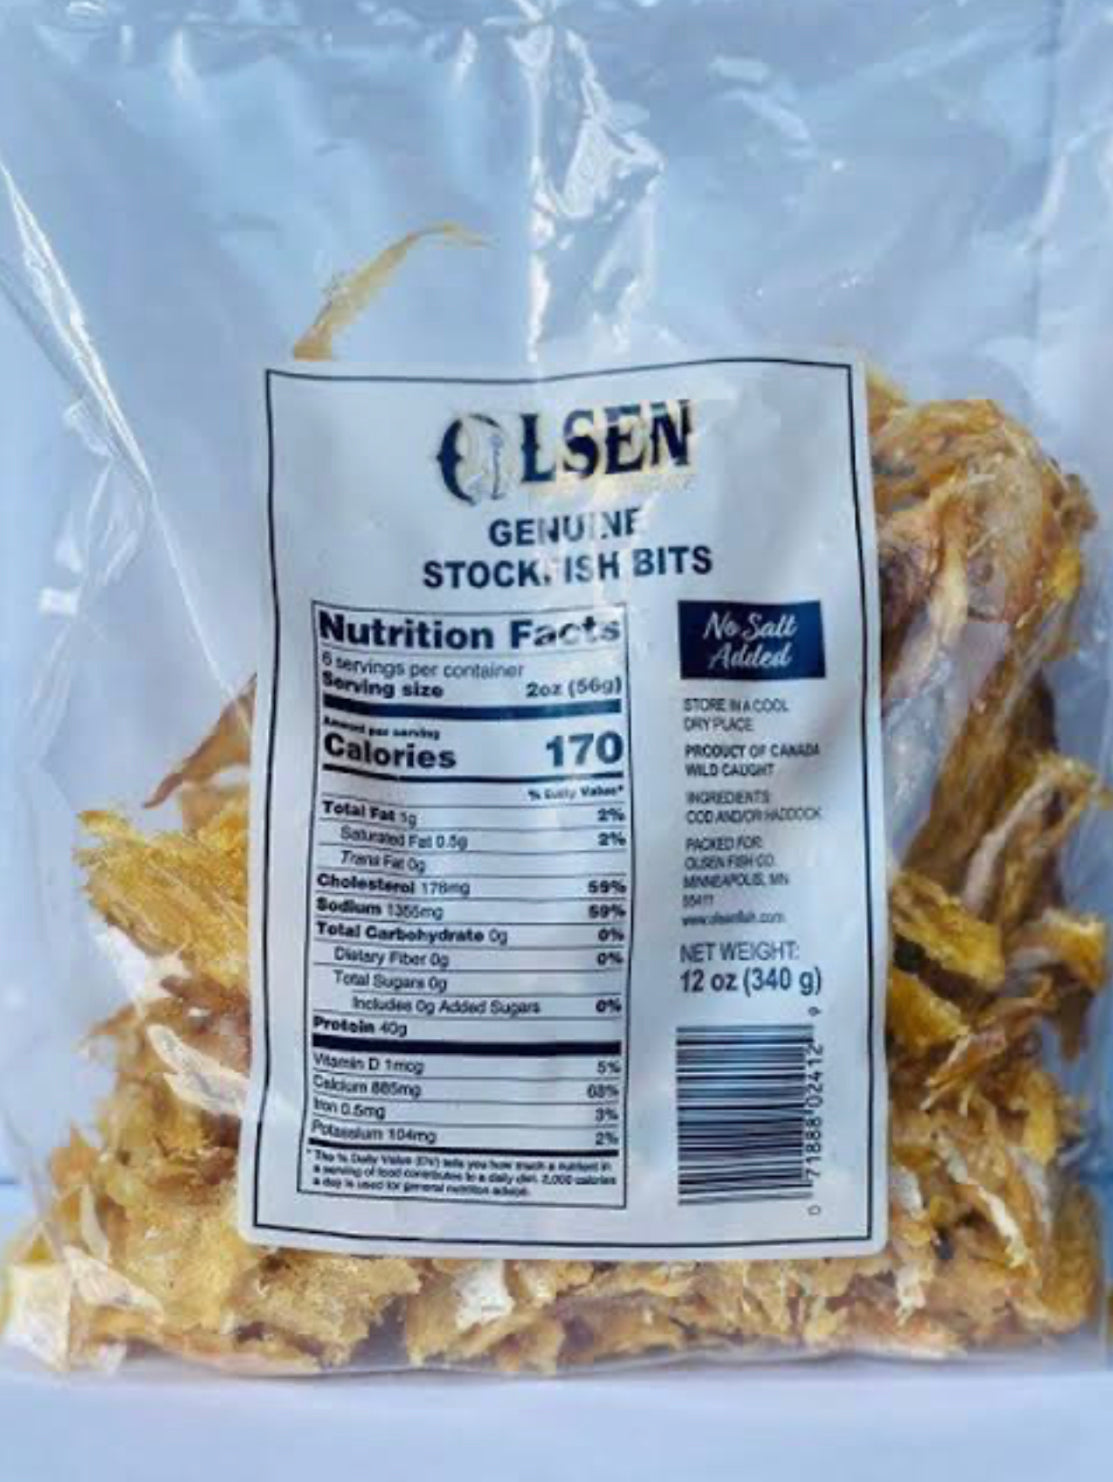 Stockfish bits (Olsens) 340g